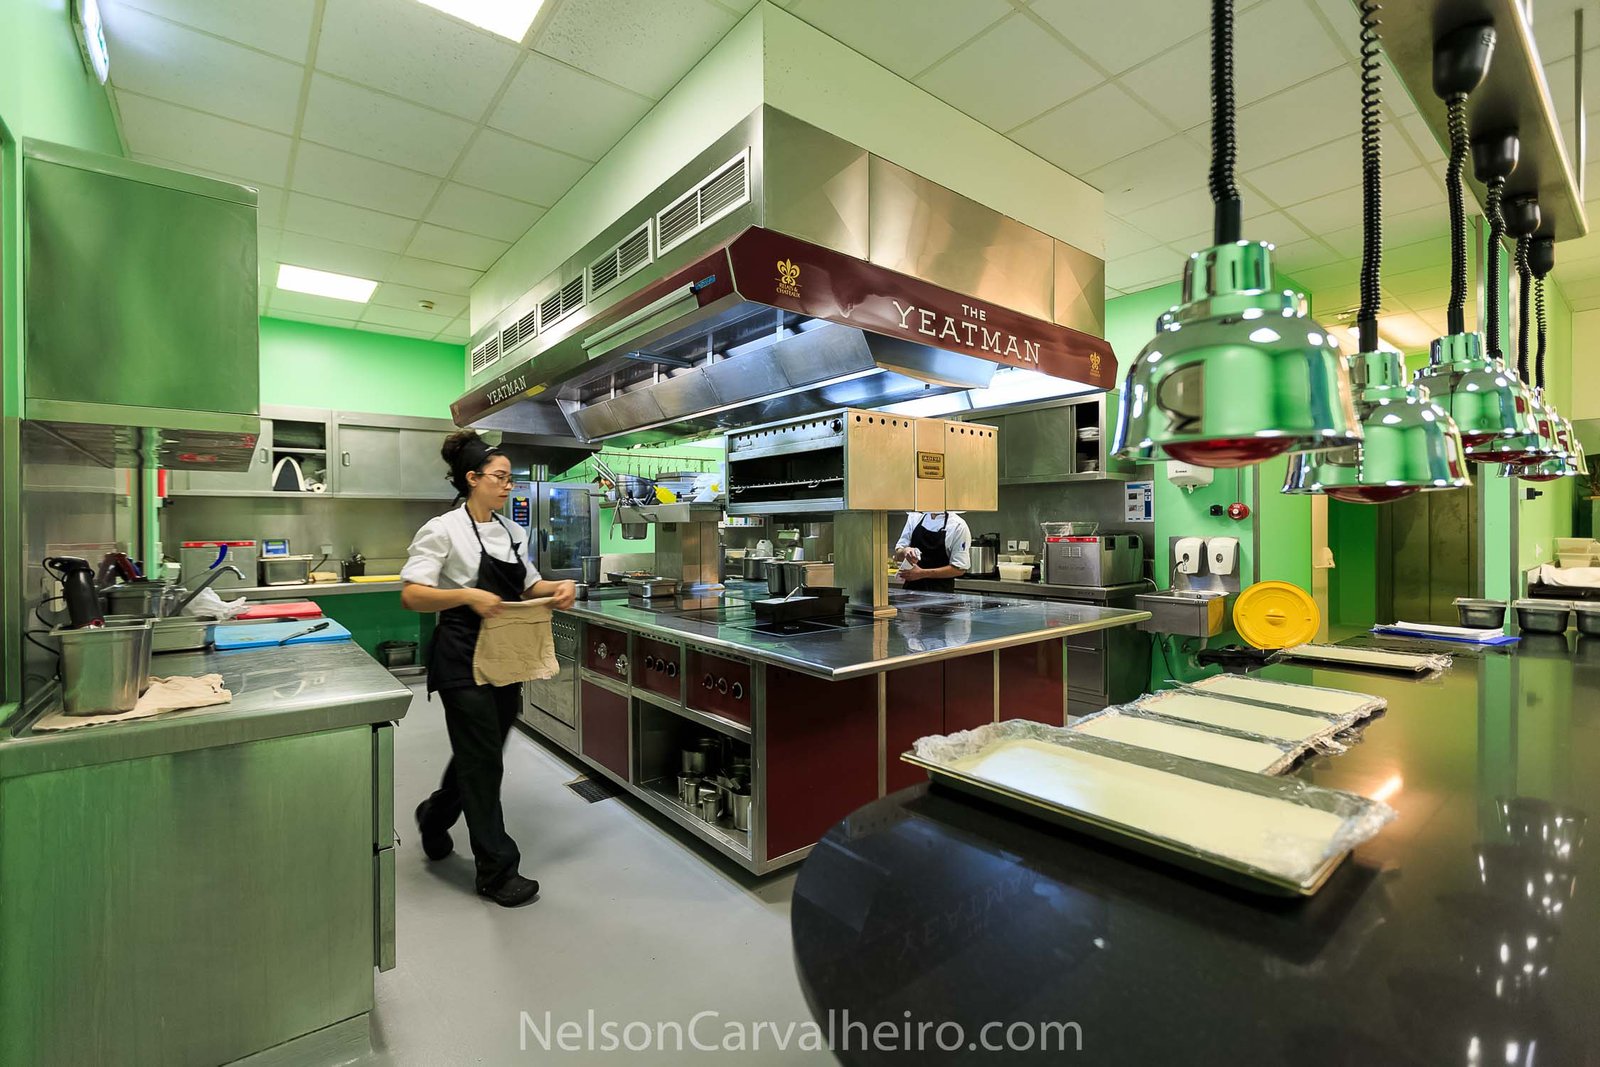 Nelson_Carvalheiro_The_Yeatman_Gastronomic_Restaurant-1